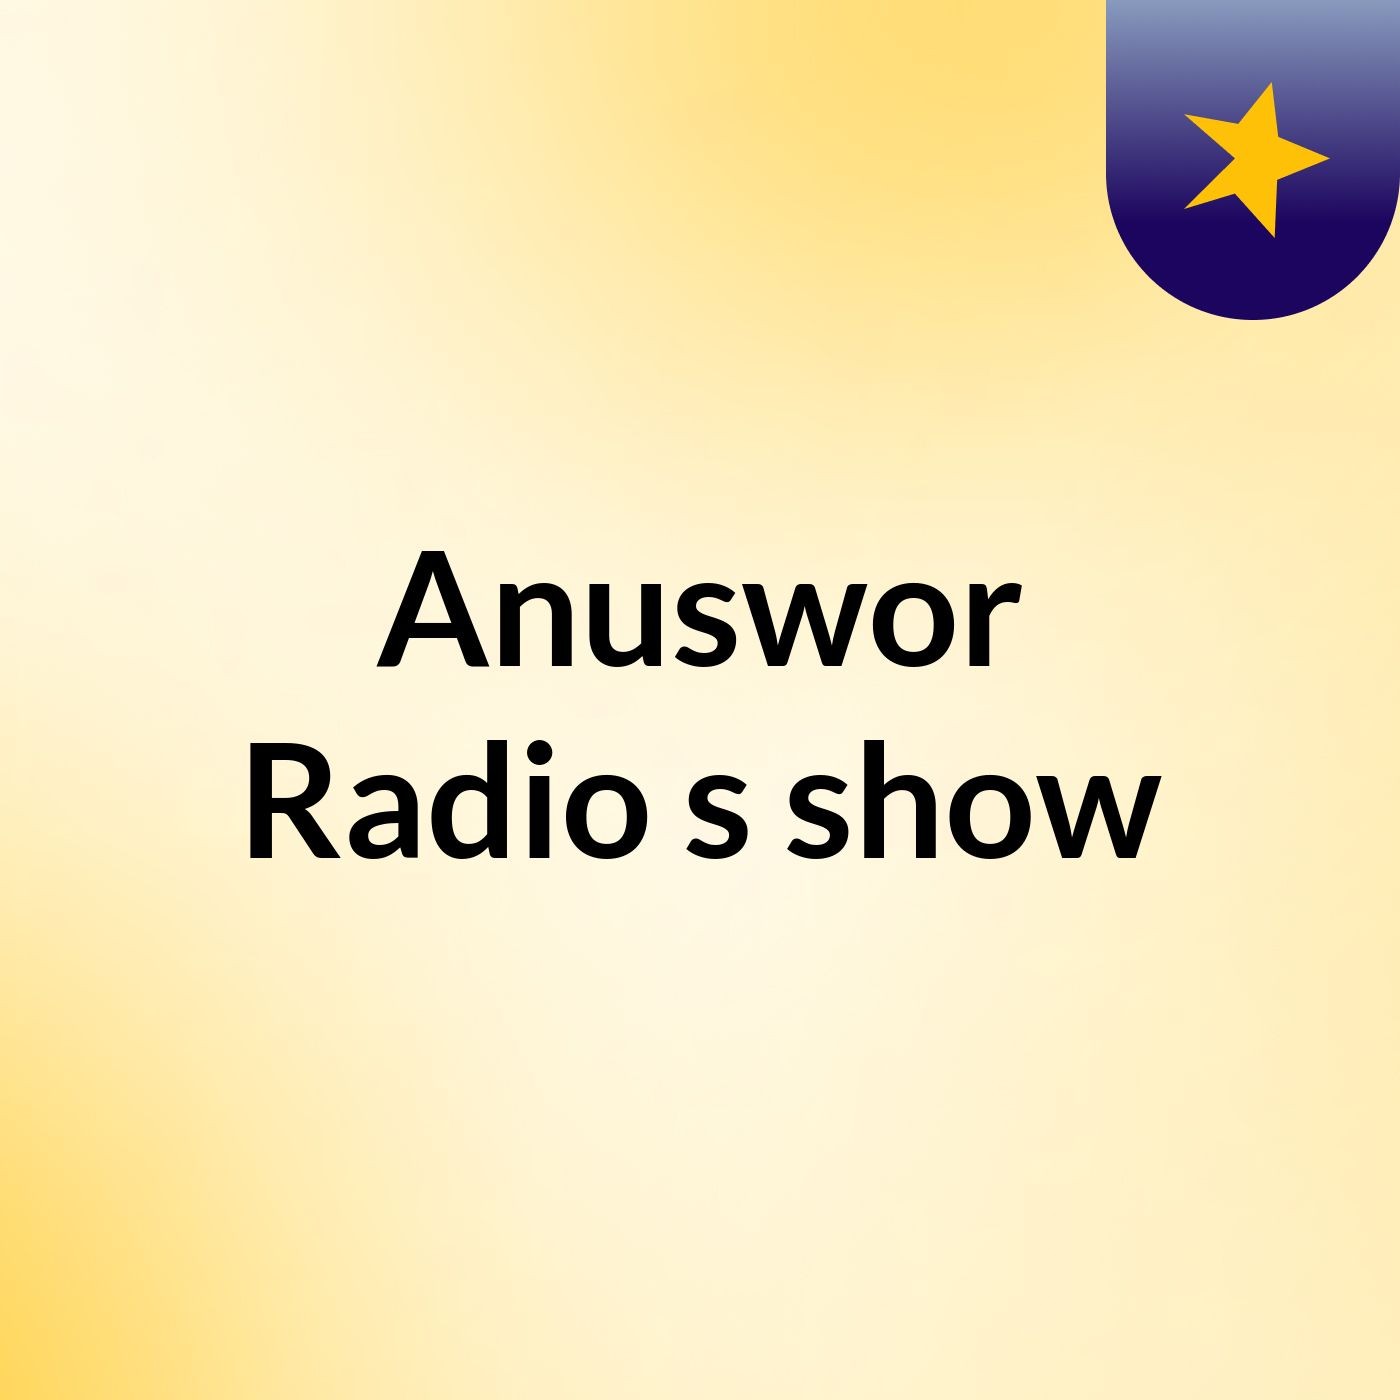 Anuswor Radio's show